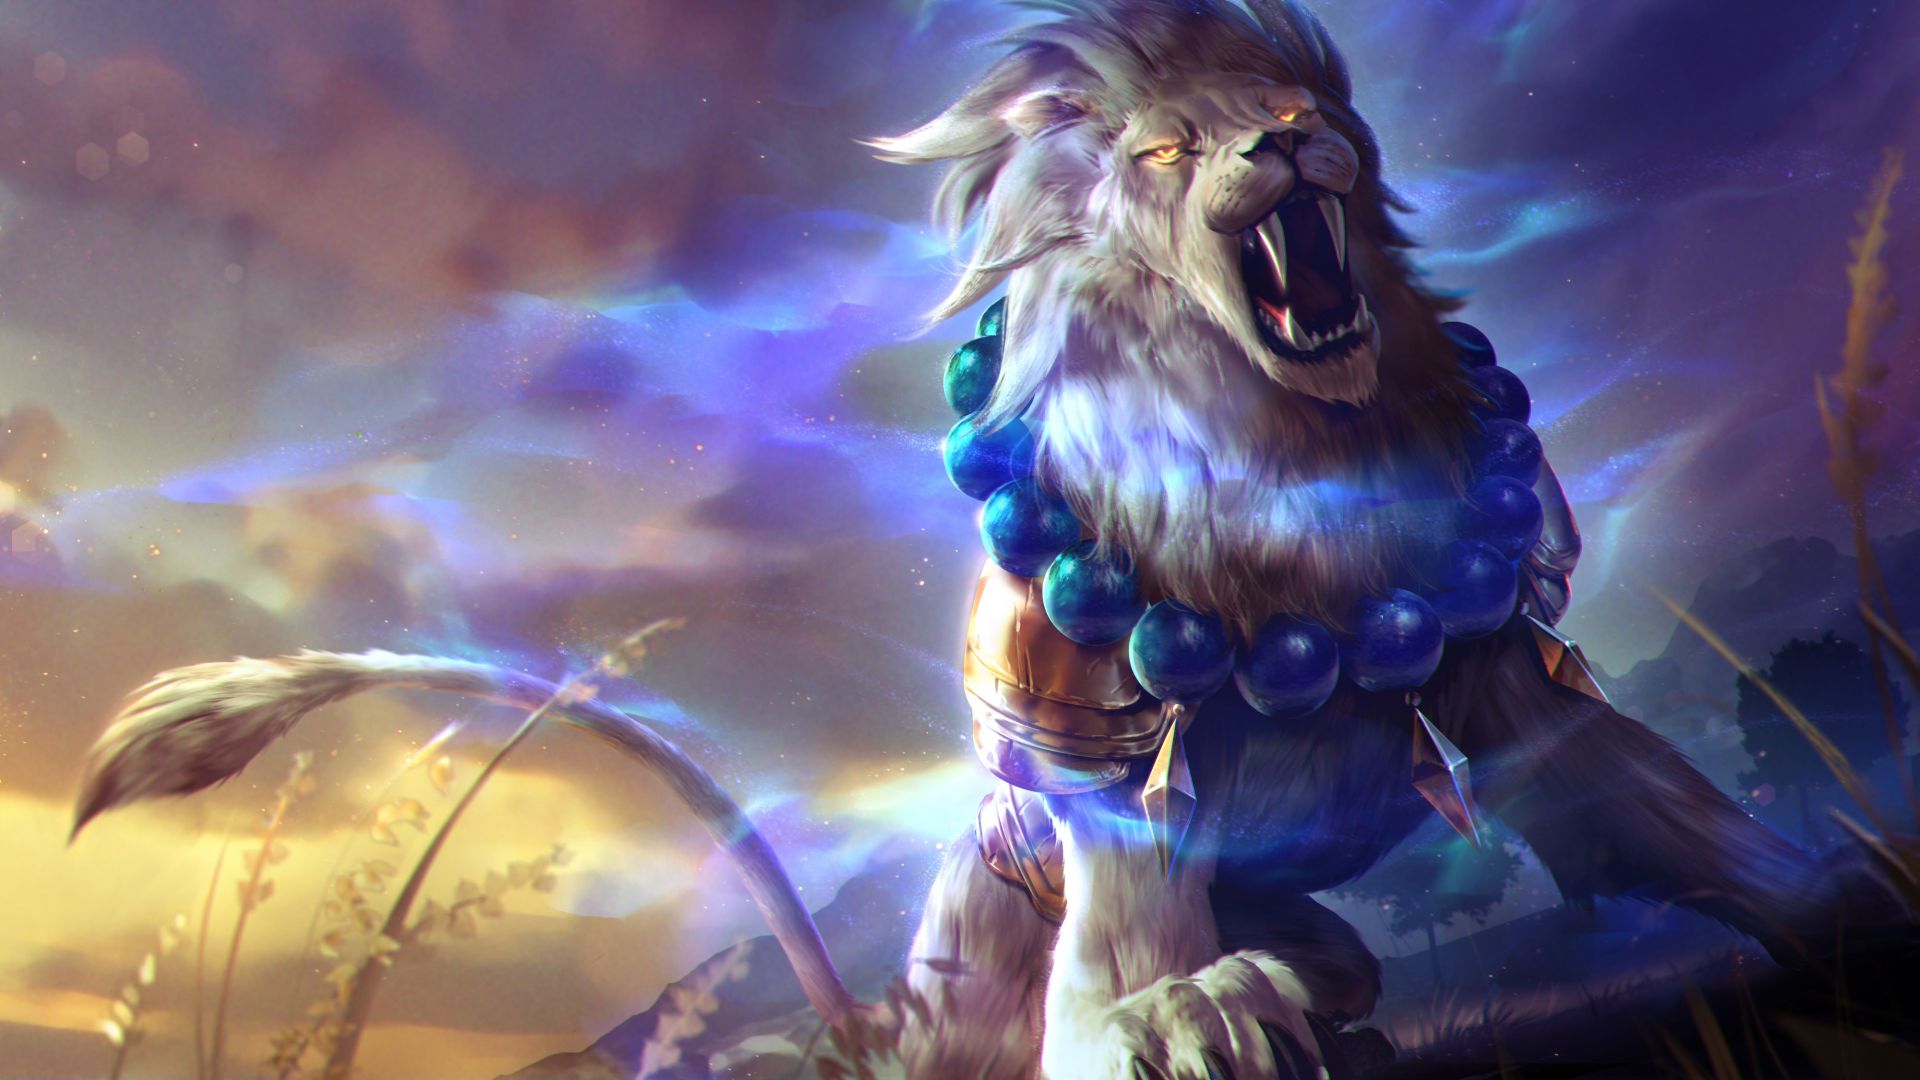 Wallpaper Lion's roar, colorful, 4k, fantasy, artwork